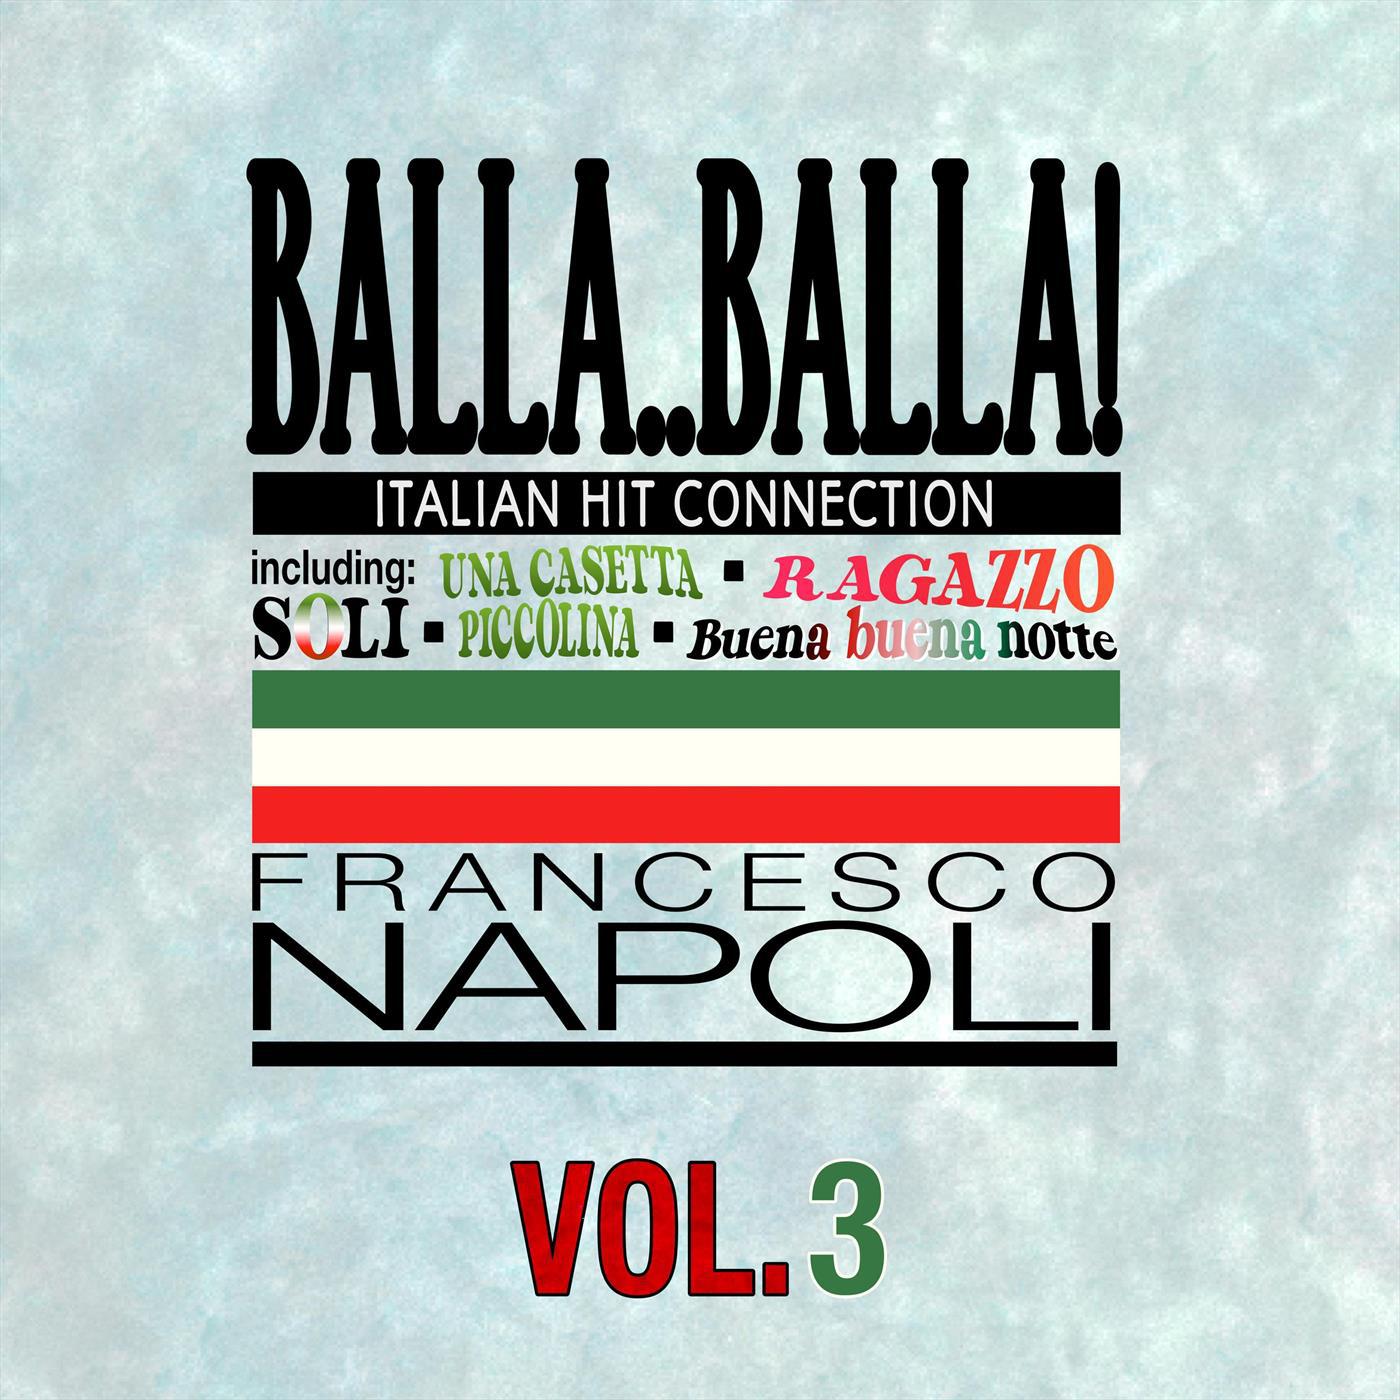 Balla..Balla! Vol.3 Italian Hit Connection